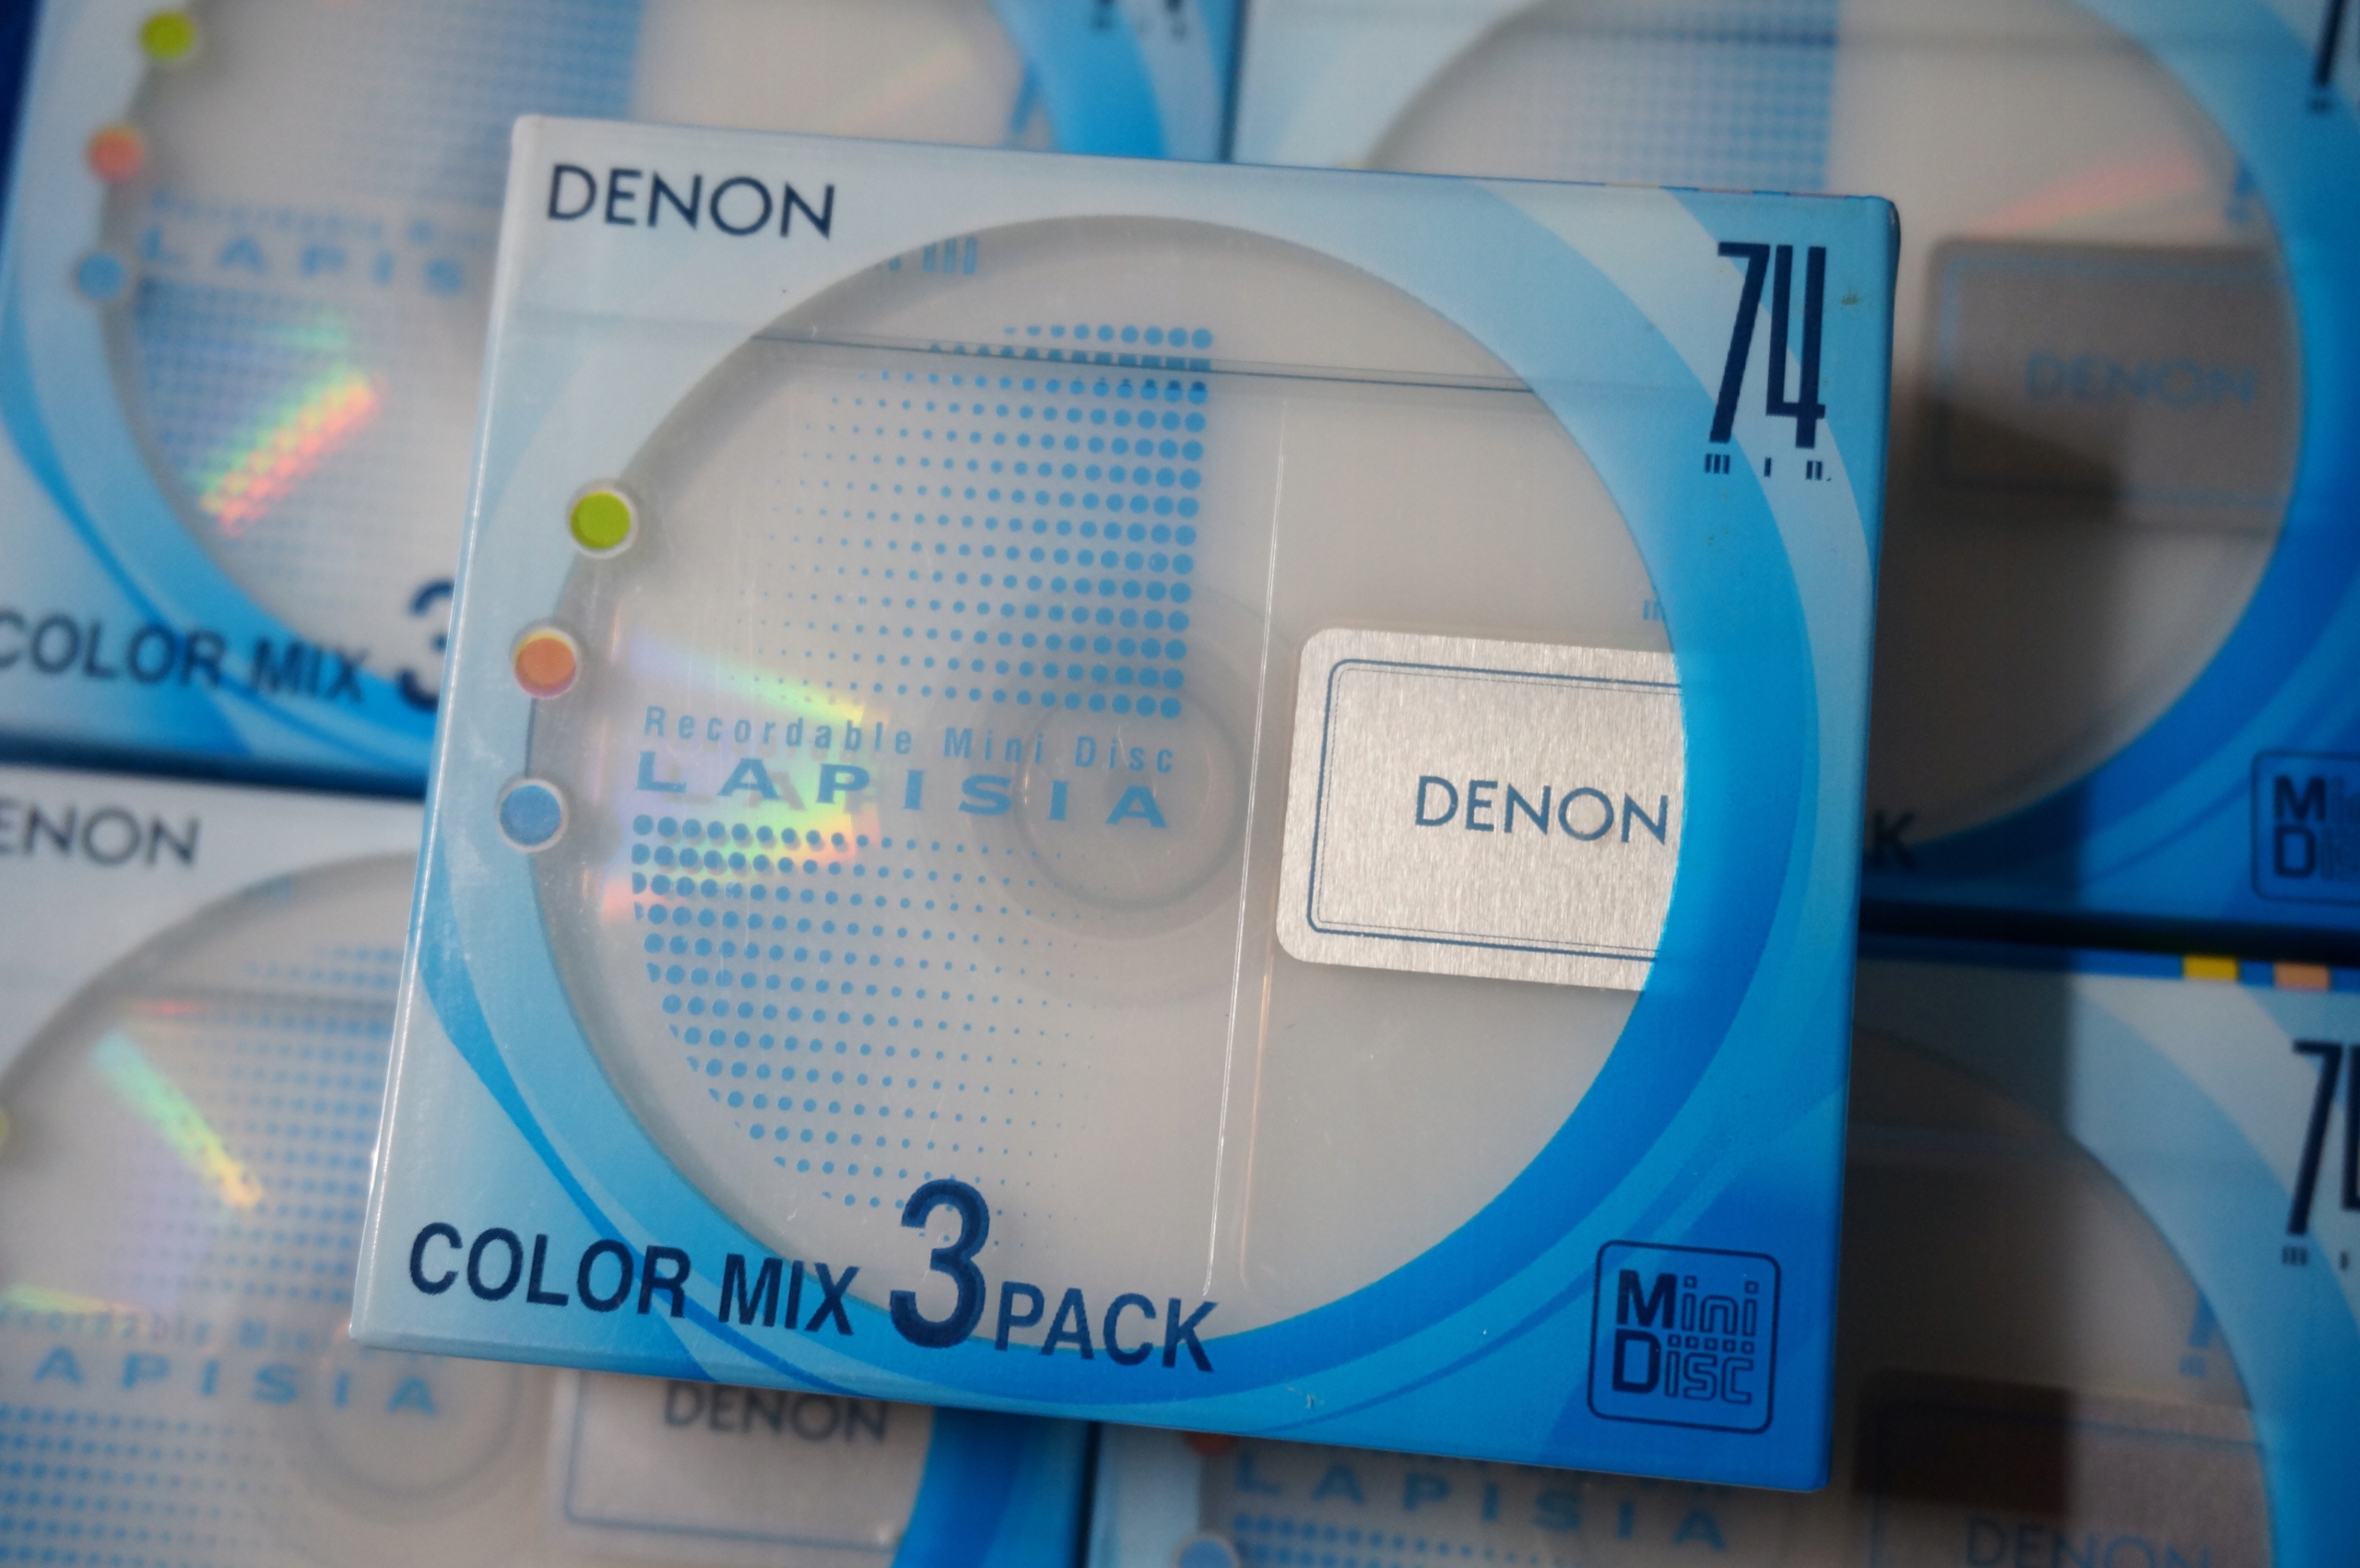 Mini Disc MD Denon Lapisia 74 3-Pack Color MIX